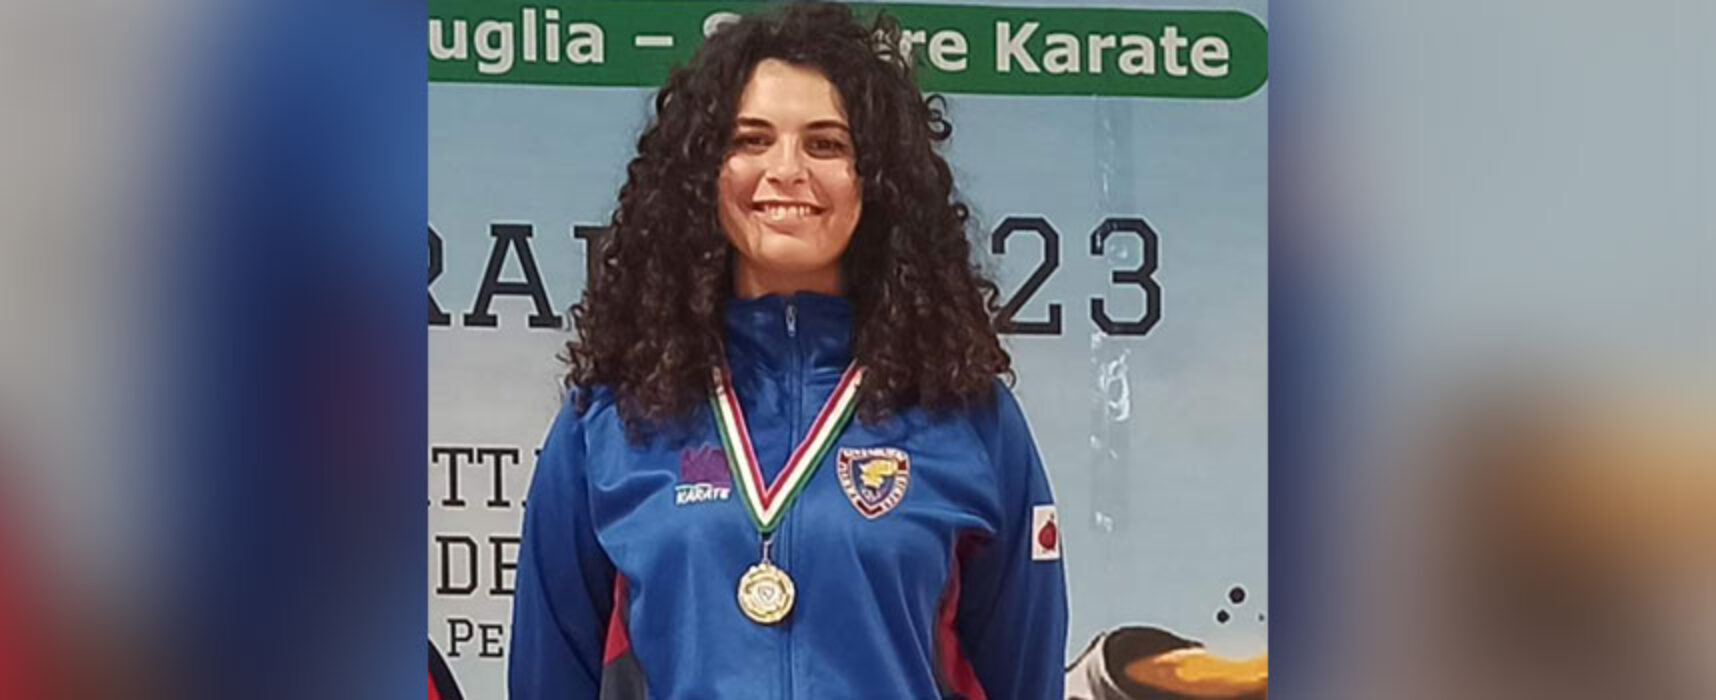 Karate: tre medaglie biscegliesi al Trofeo delle Regioni